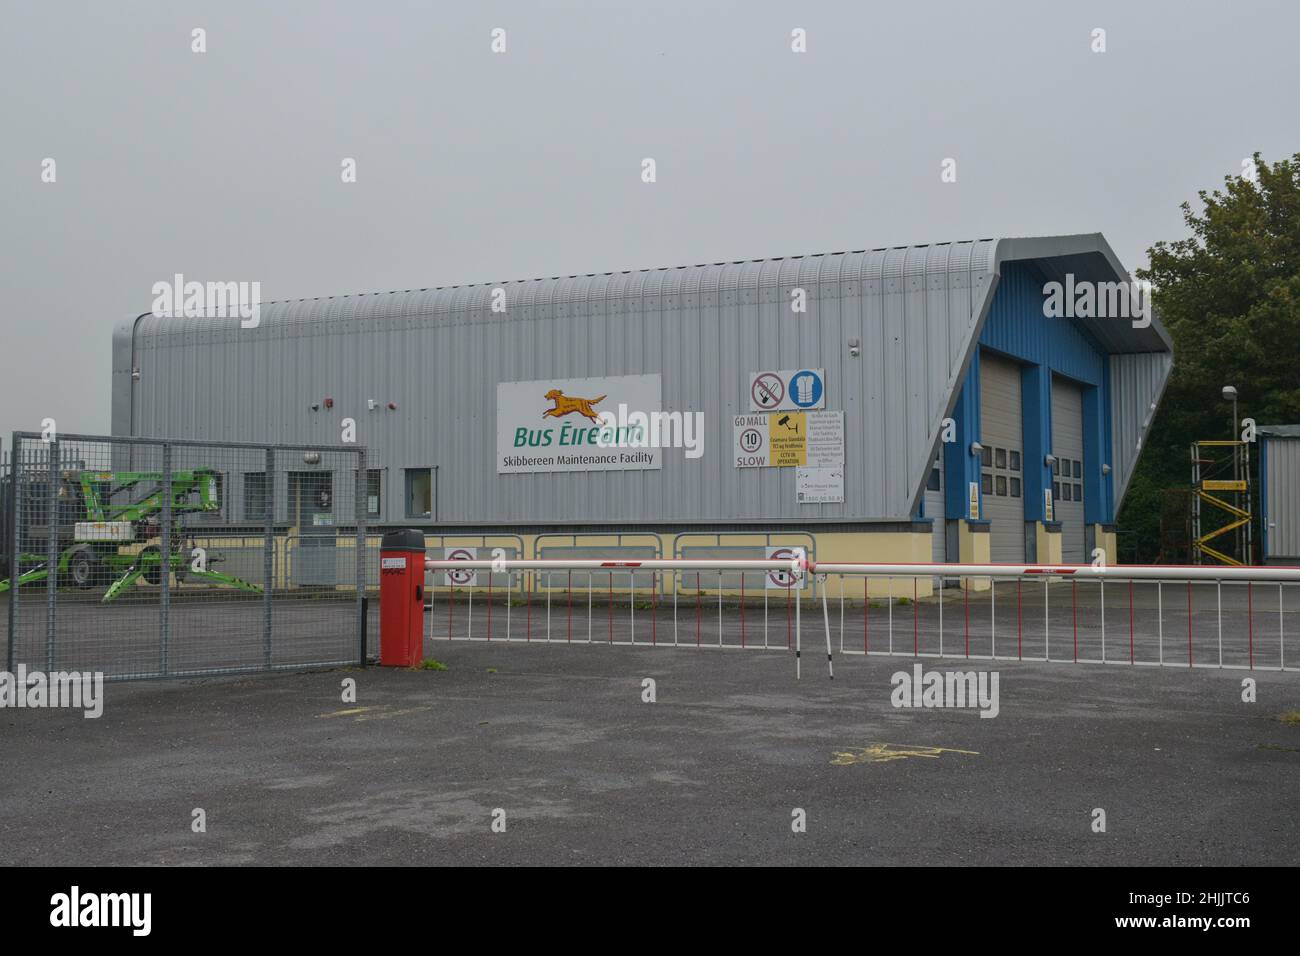 Bus Eireann Skibbereen Maintenance Facility, Skibbereen, Comté de Cork, Irlande. Banque D'Images